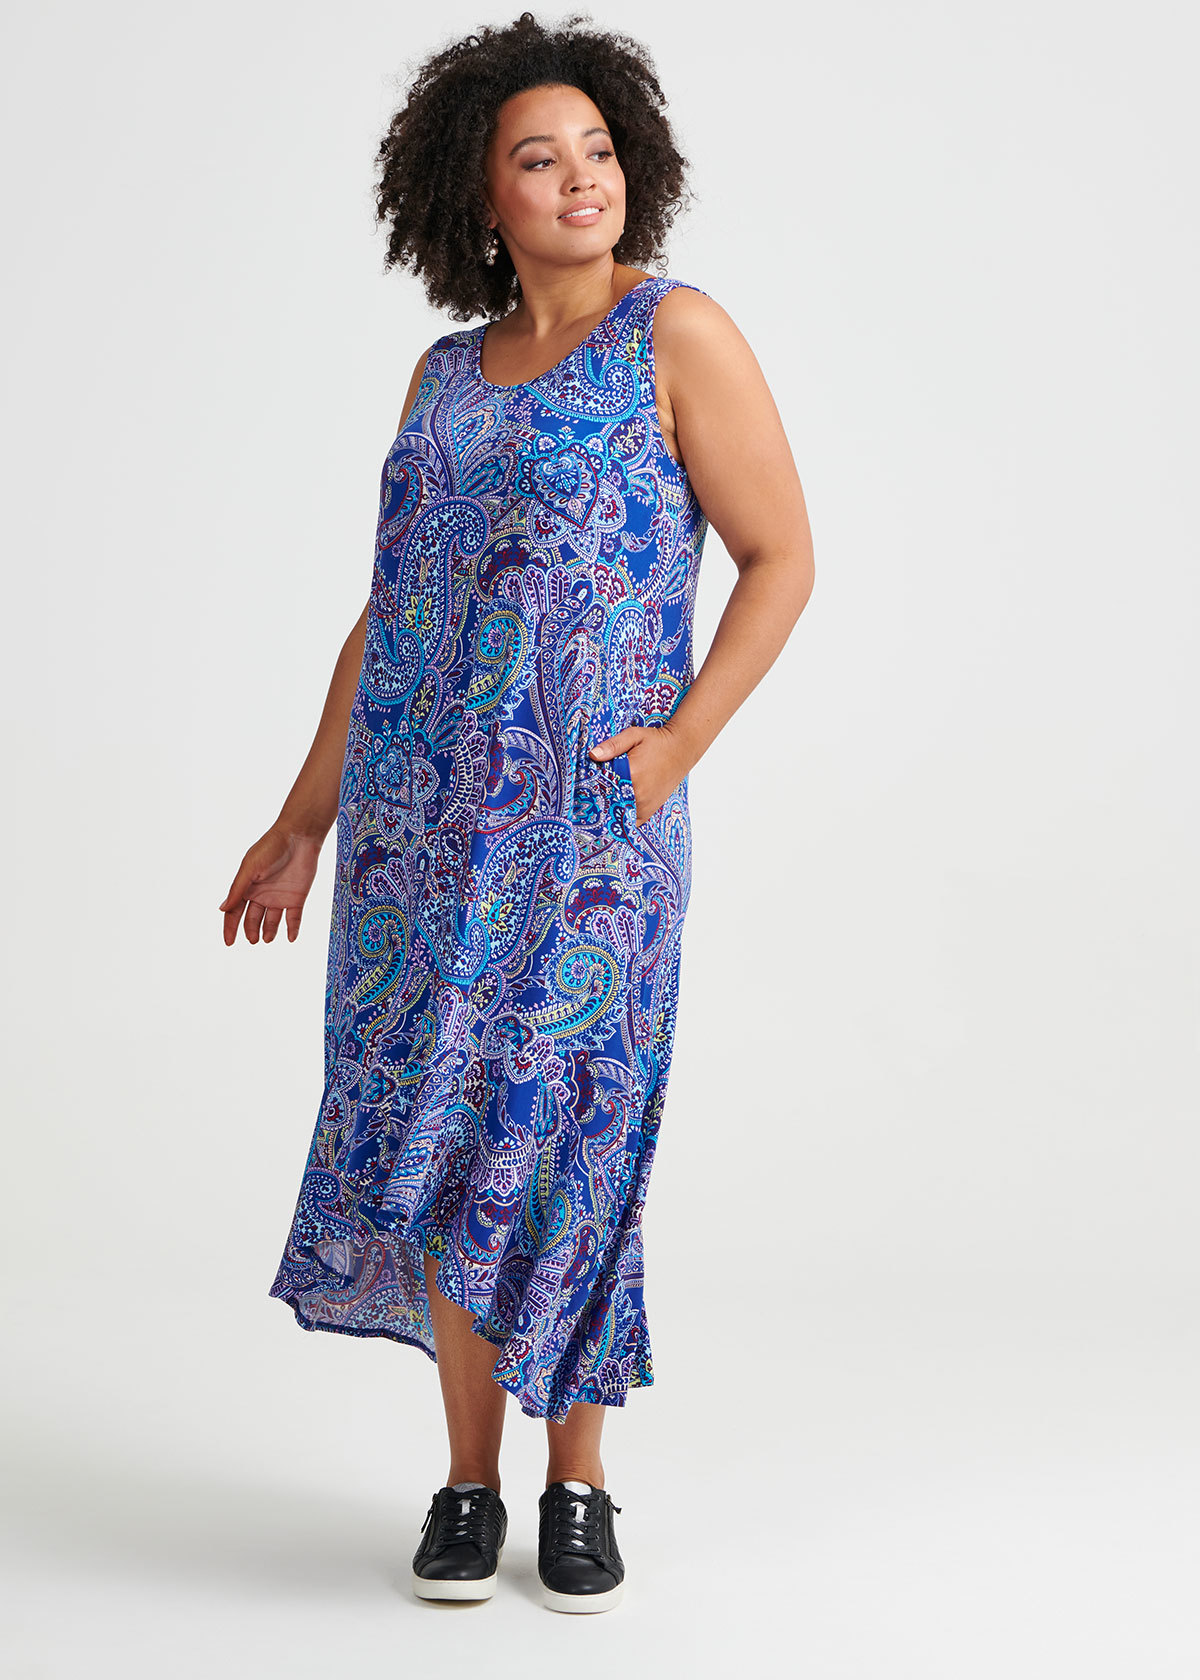 Island Girl Dress in Print, Sizes 12-30 | Taking Shape NZ